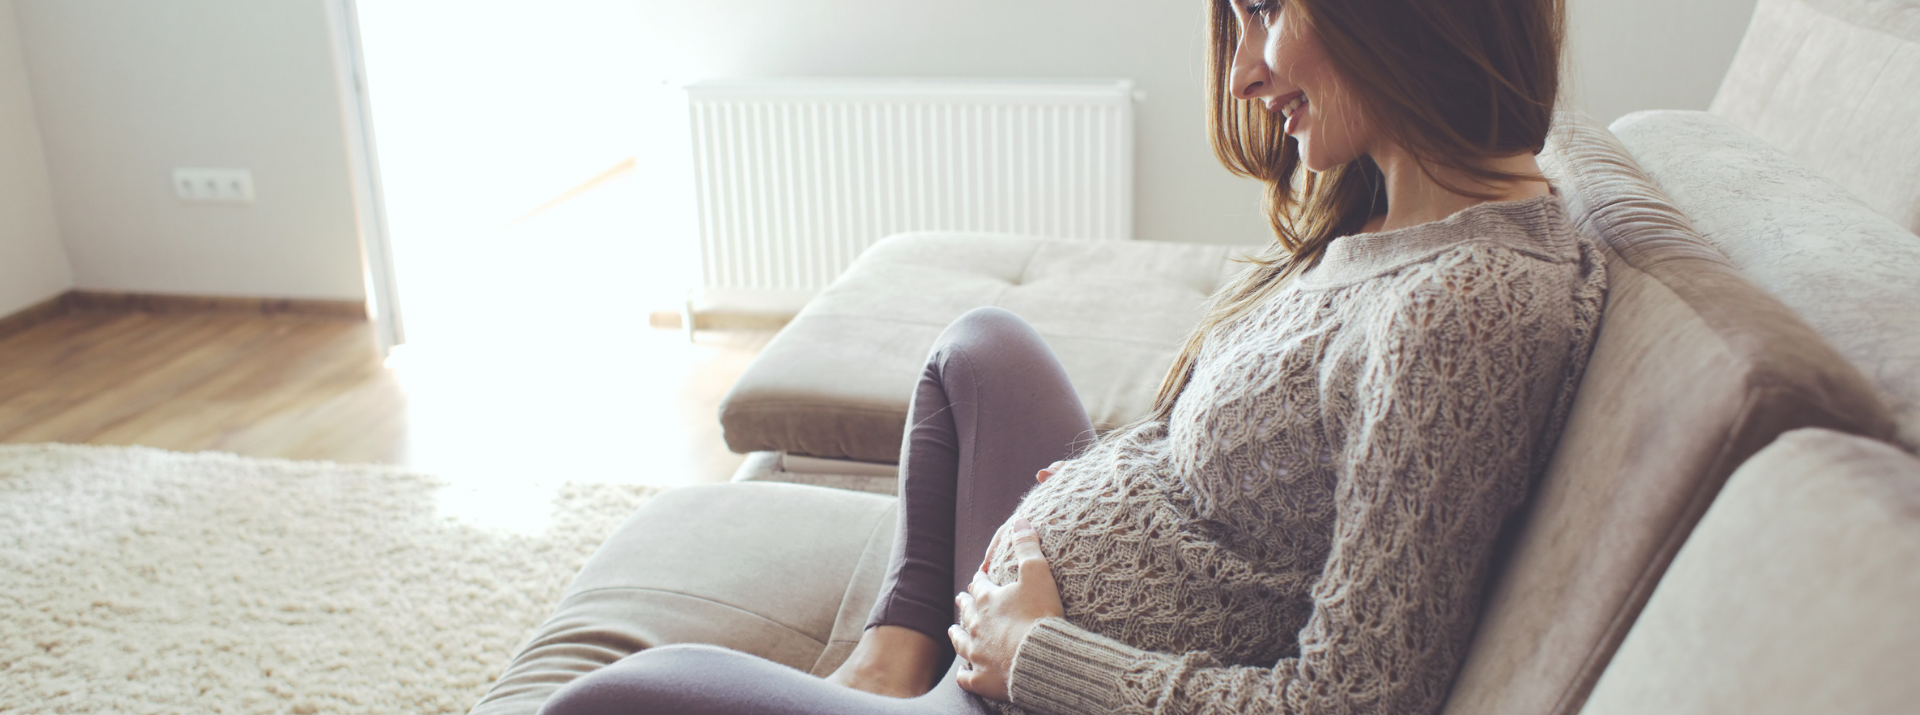 preconception
pregnancy 
postpartum 